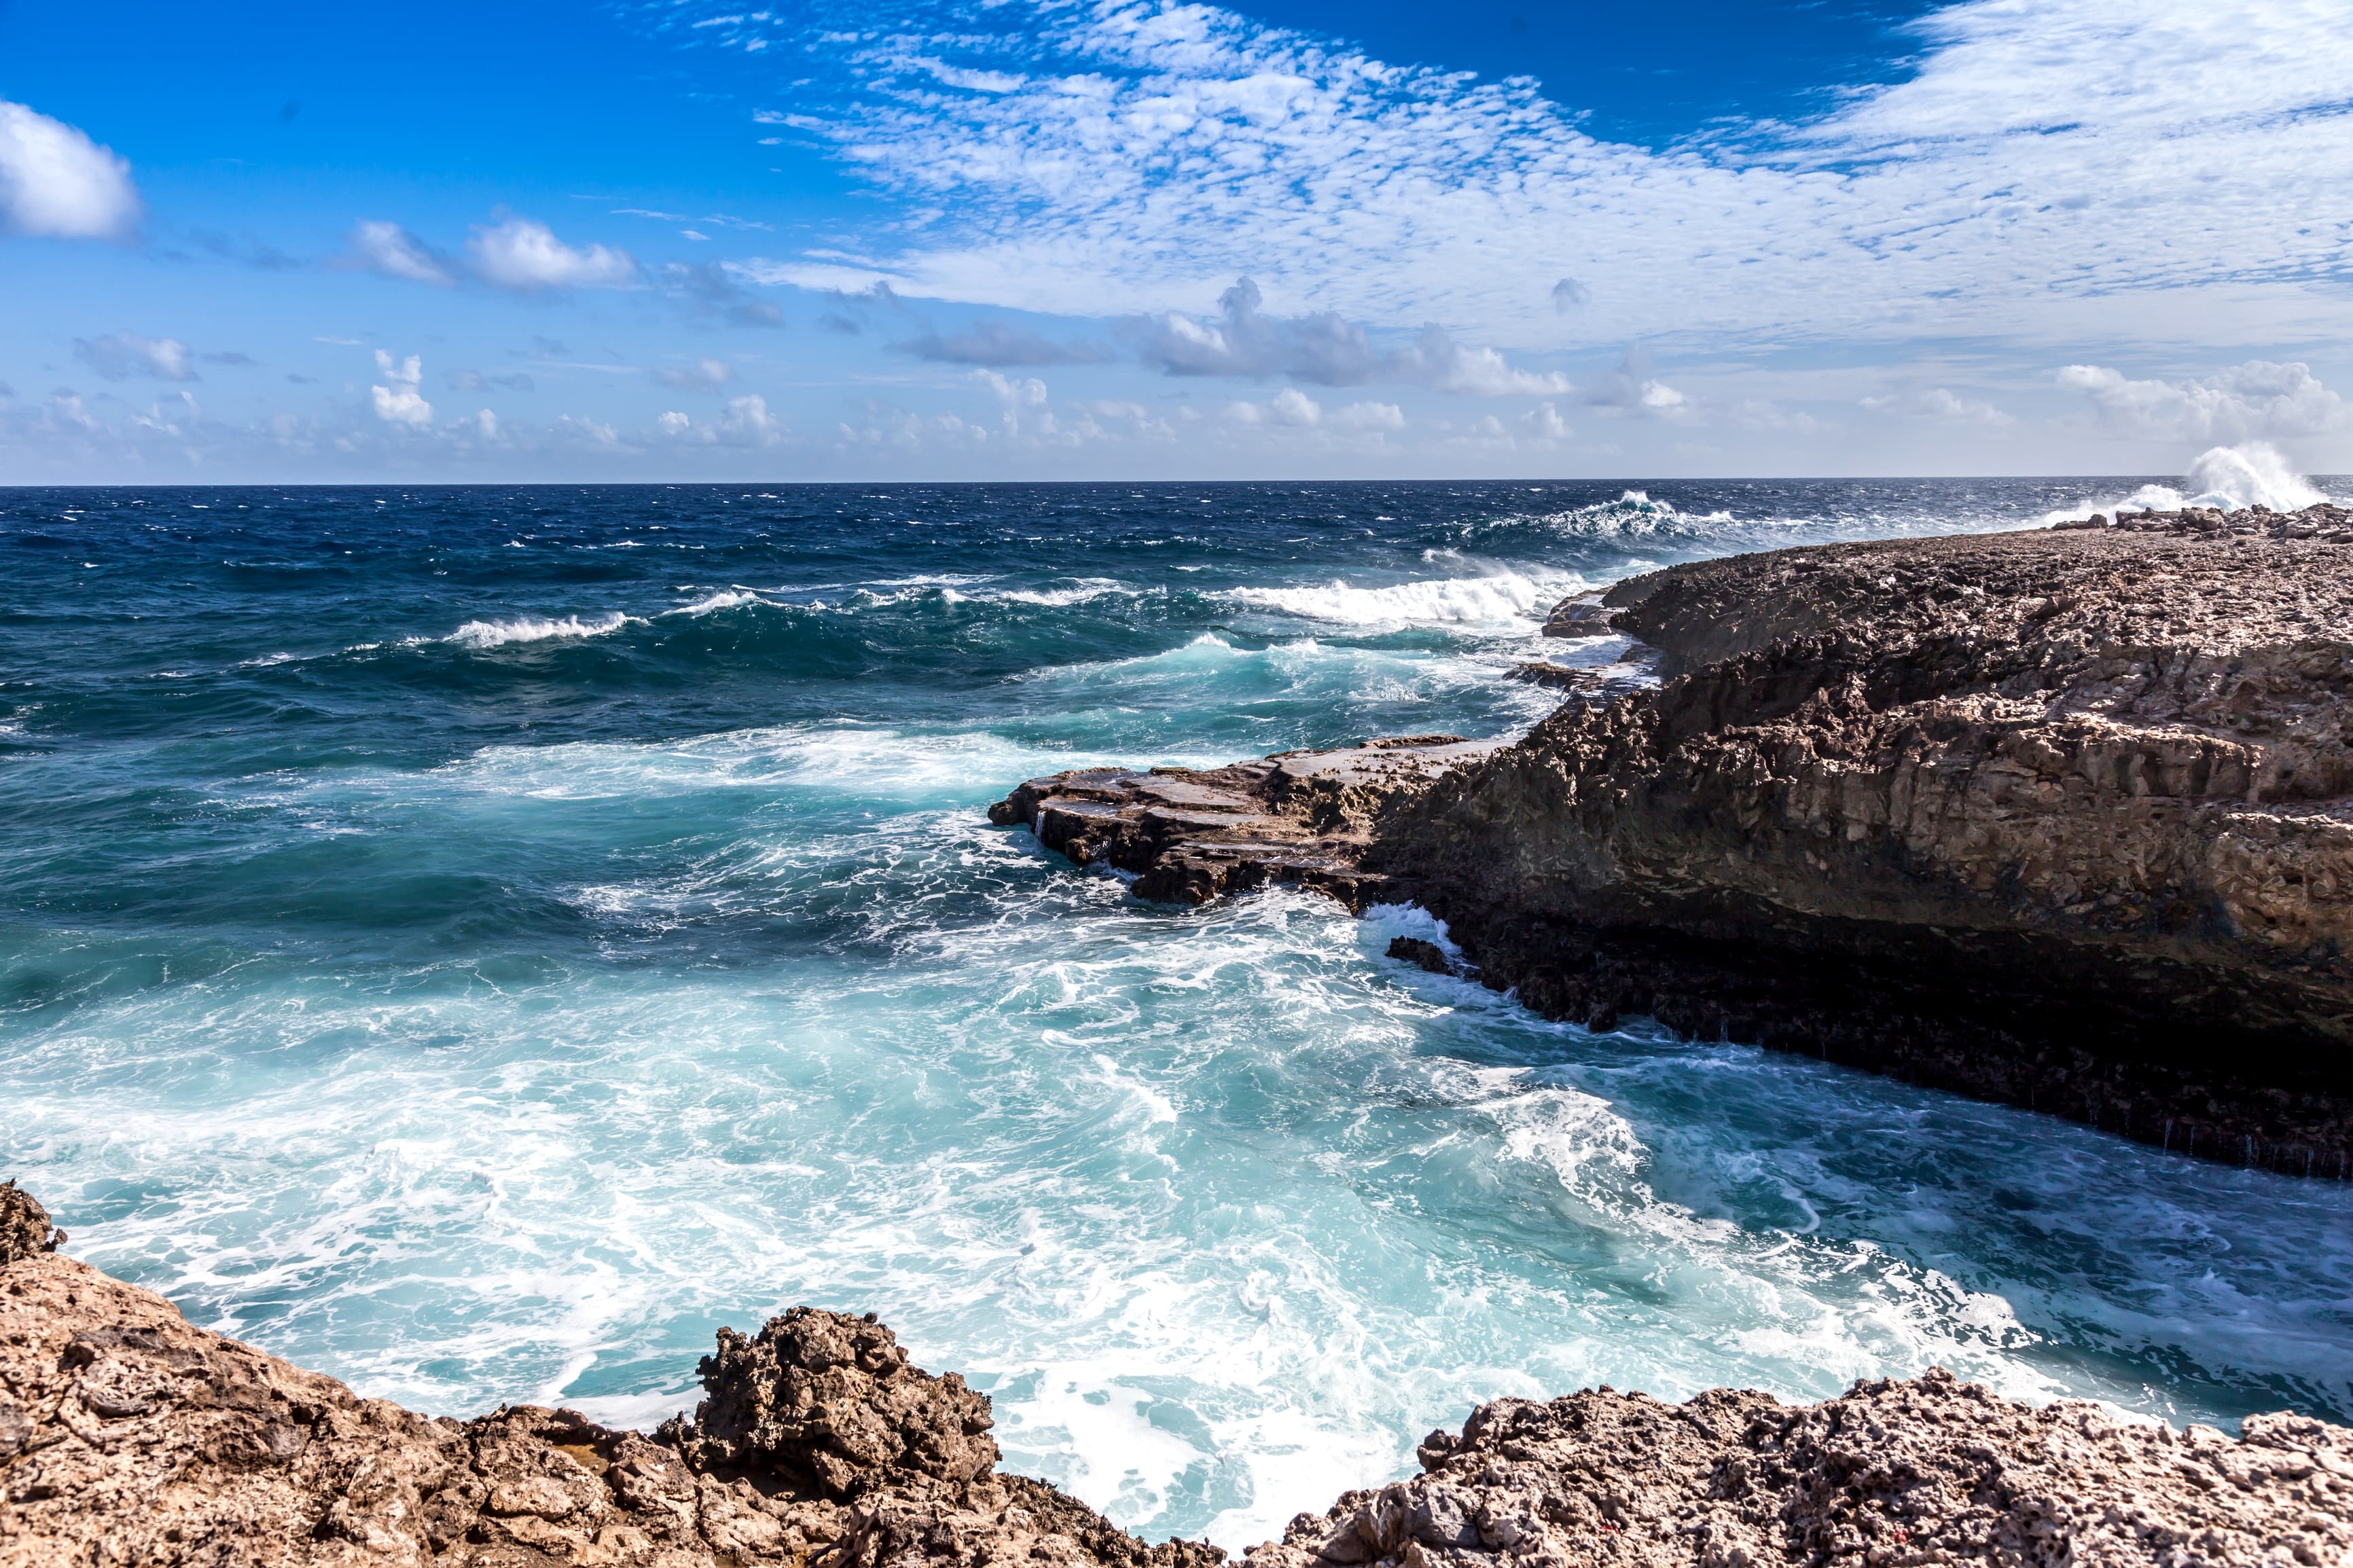 Crashing waves at Shete Boka National Park in Curaçao.